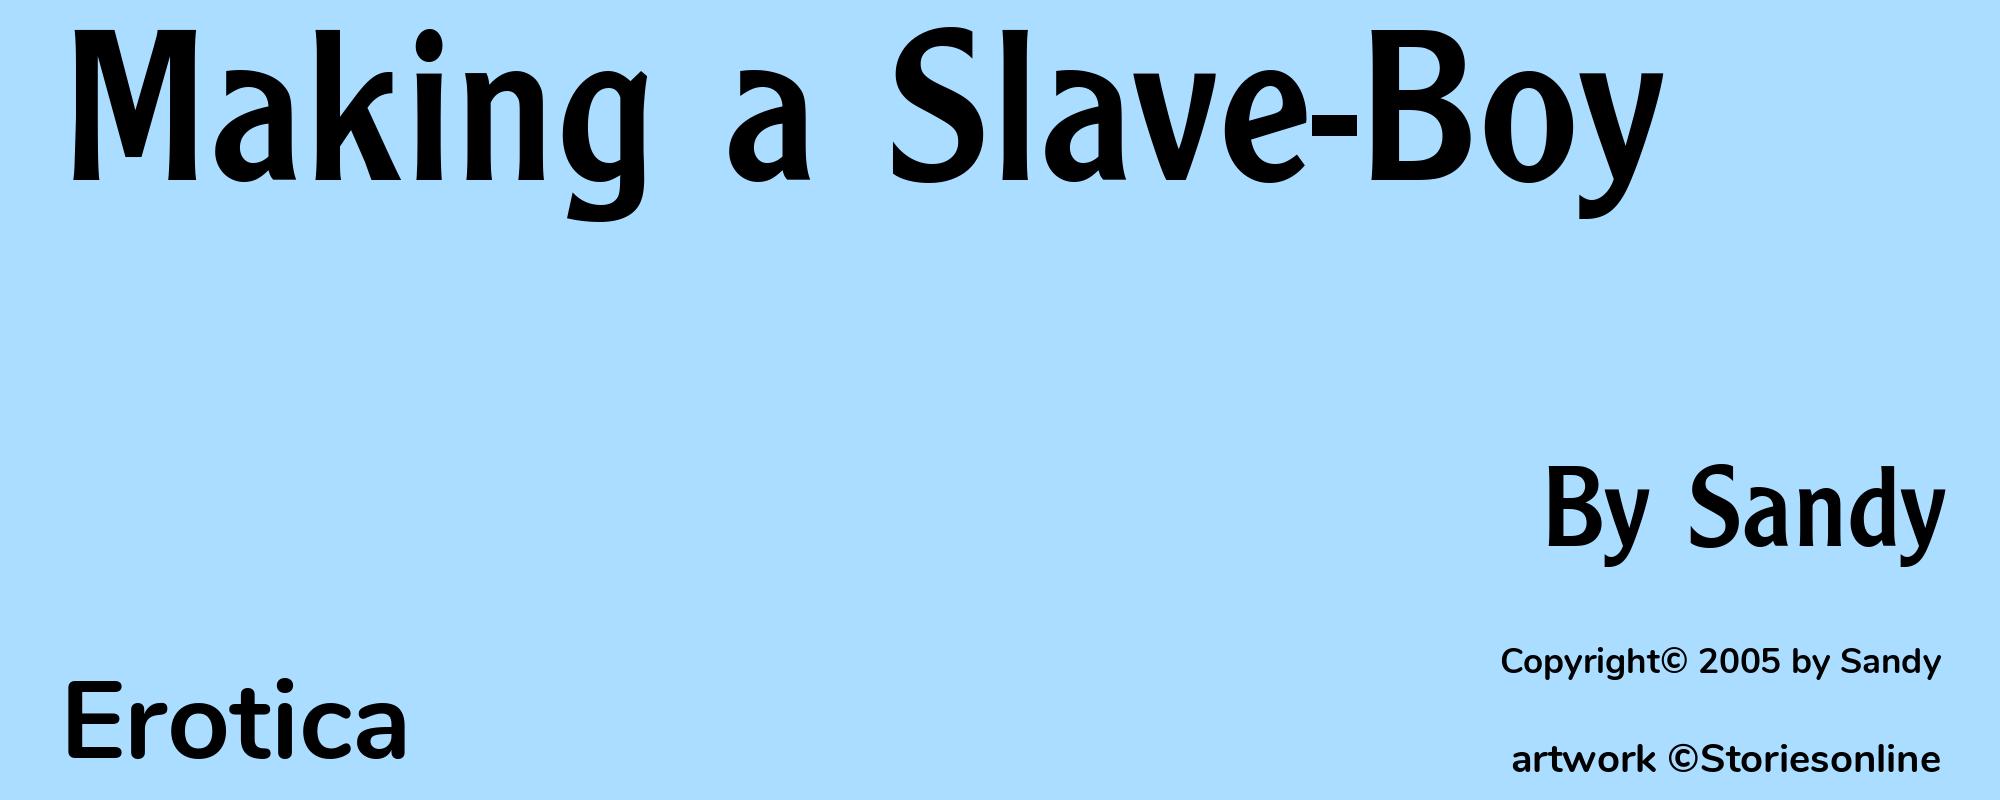 Making a Slave-Boy - Cover